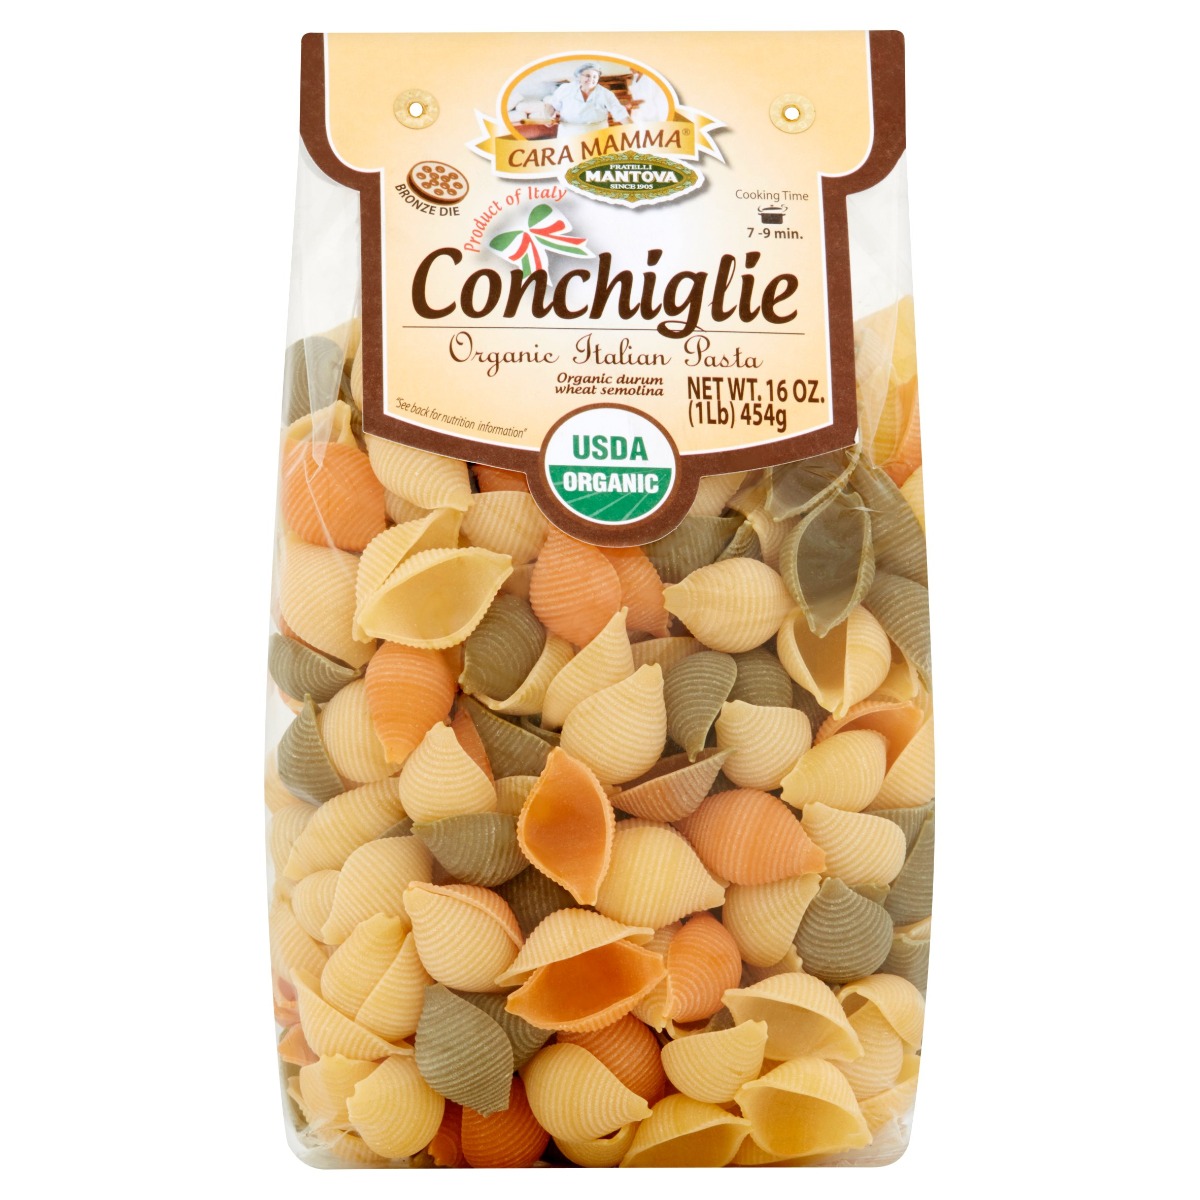 MANTOVA: Pasta Conchiglioni Organic, 16 oz - 0048176401108